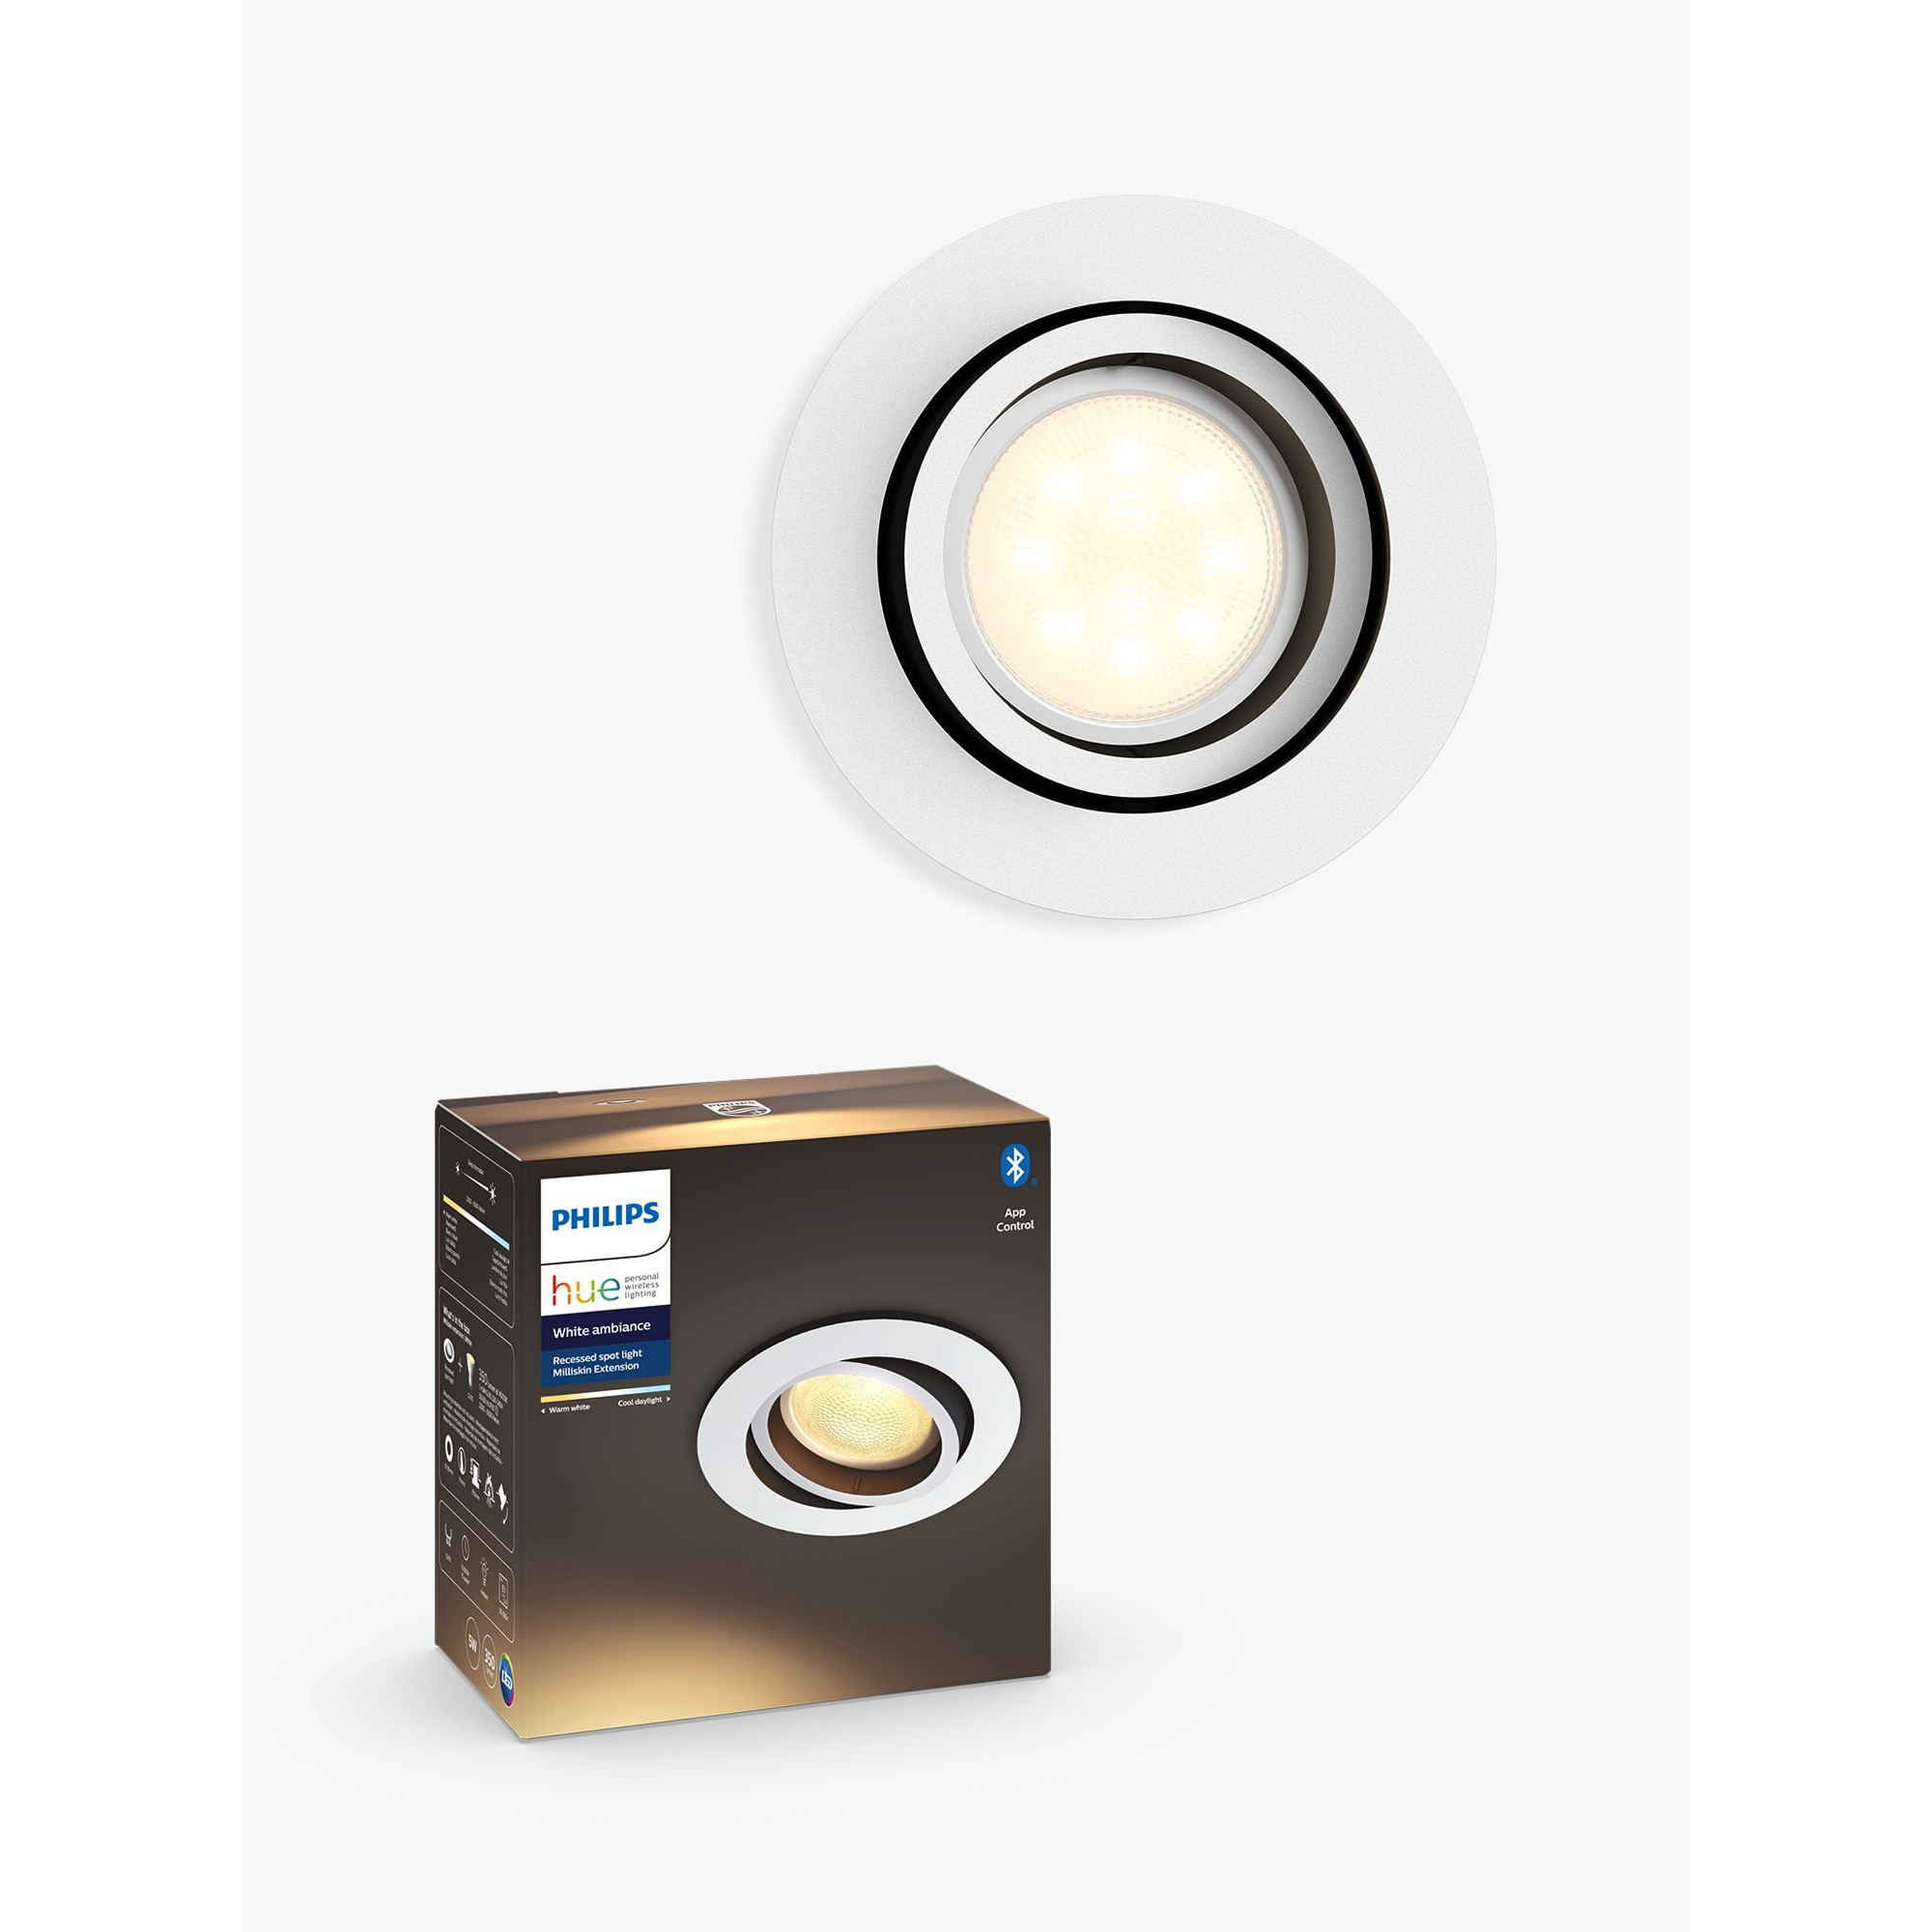 Philips Hue White Ambiance Milliskin GU10 LED Recessed Smart Spotlight with Bluetooth - image 1